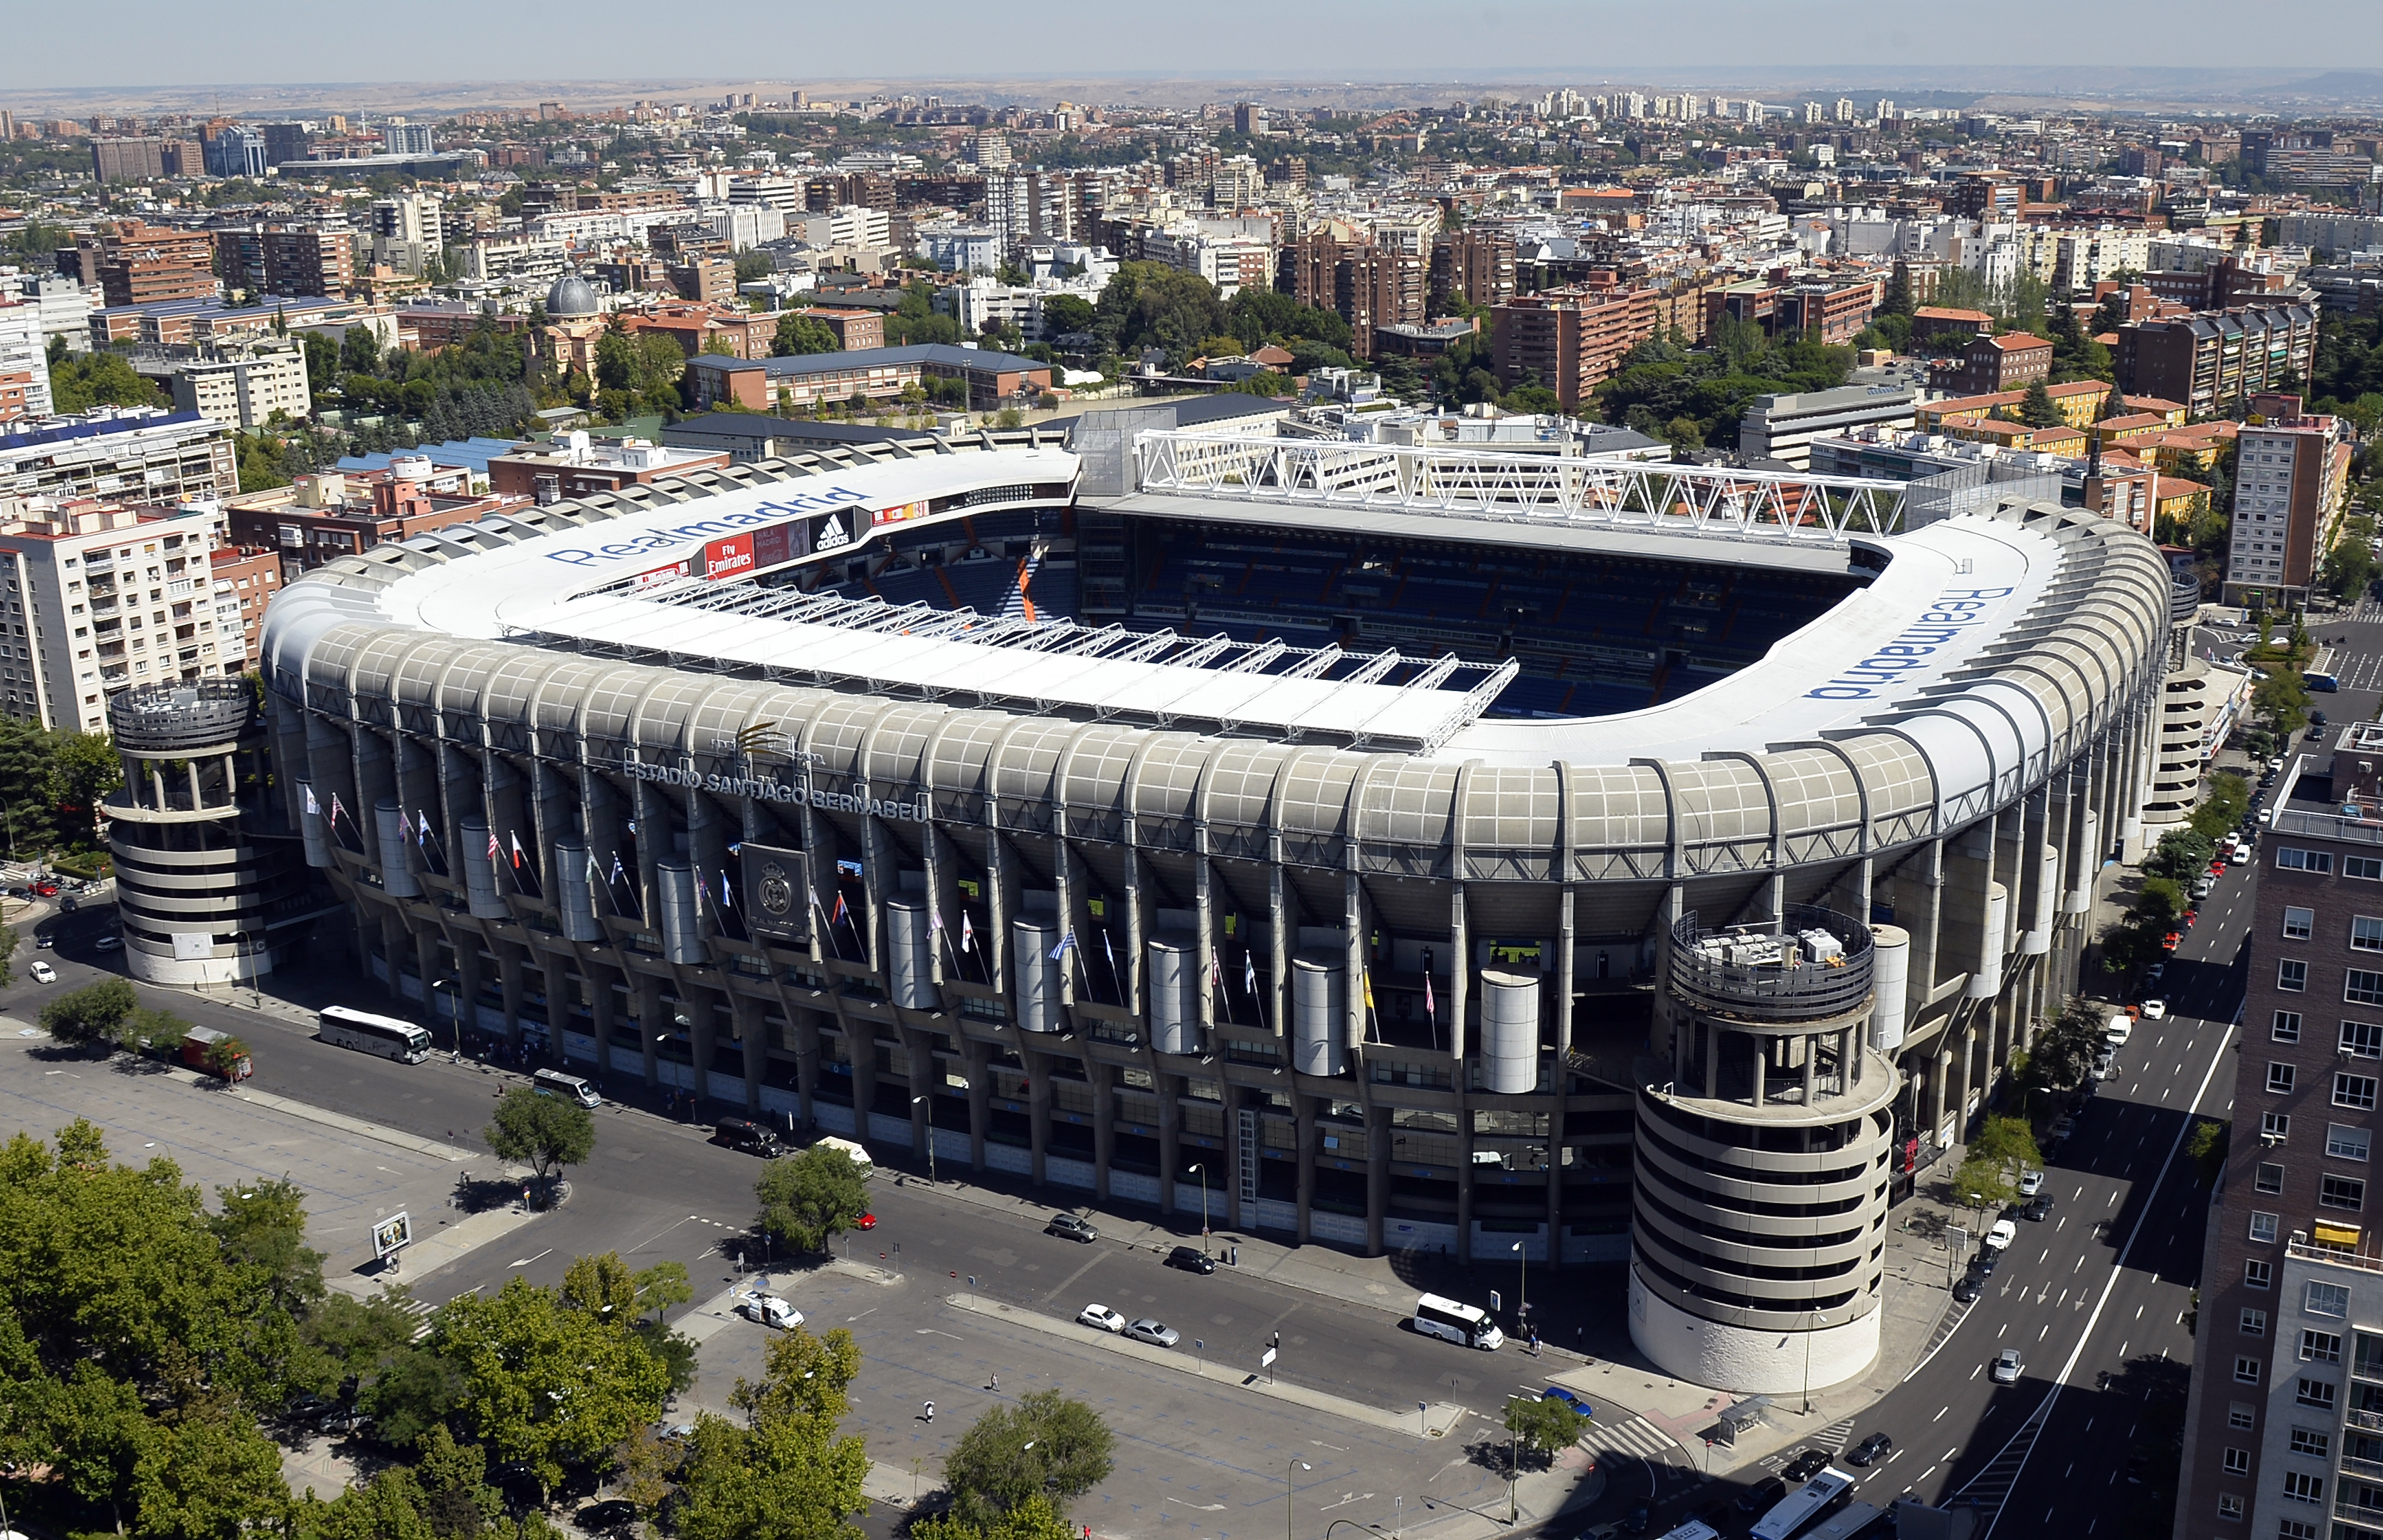 Real Madrid Santiago Bernabeu Stadium Wallpapers PixelsTalkNet